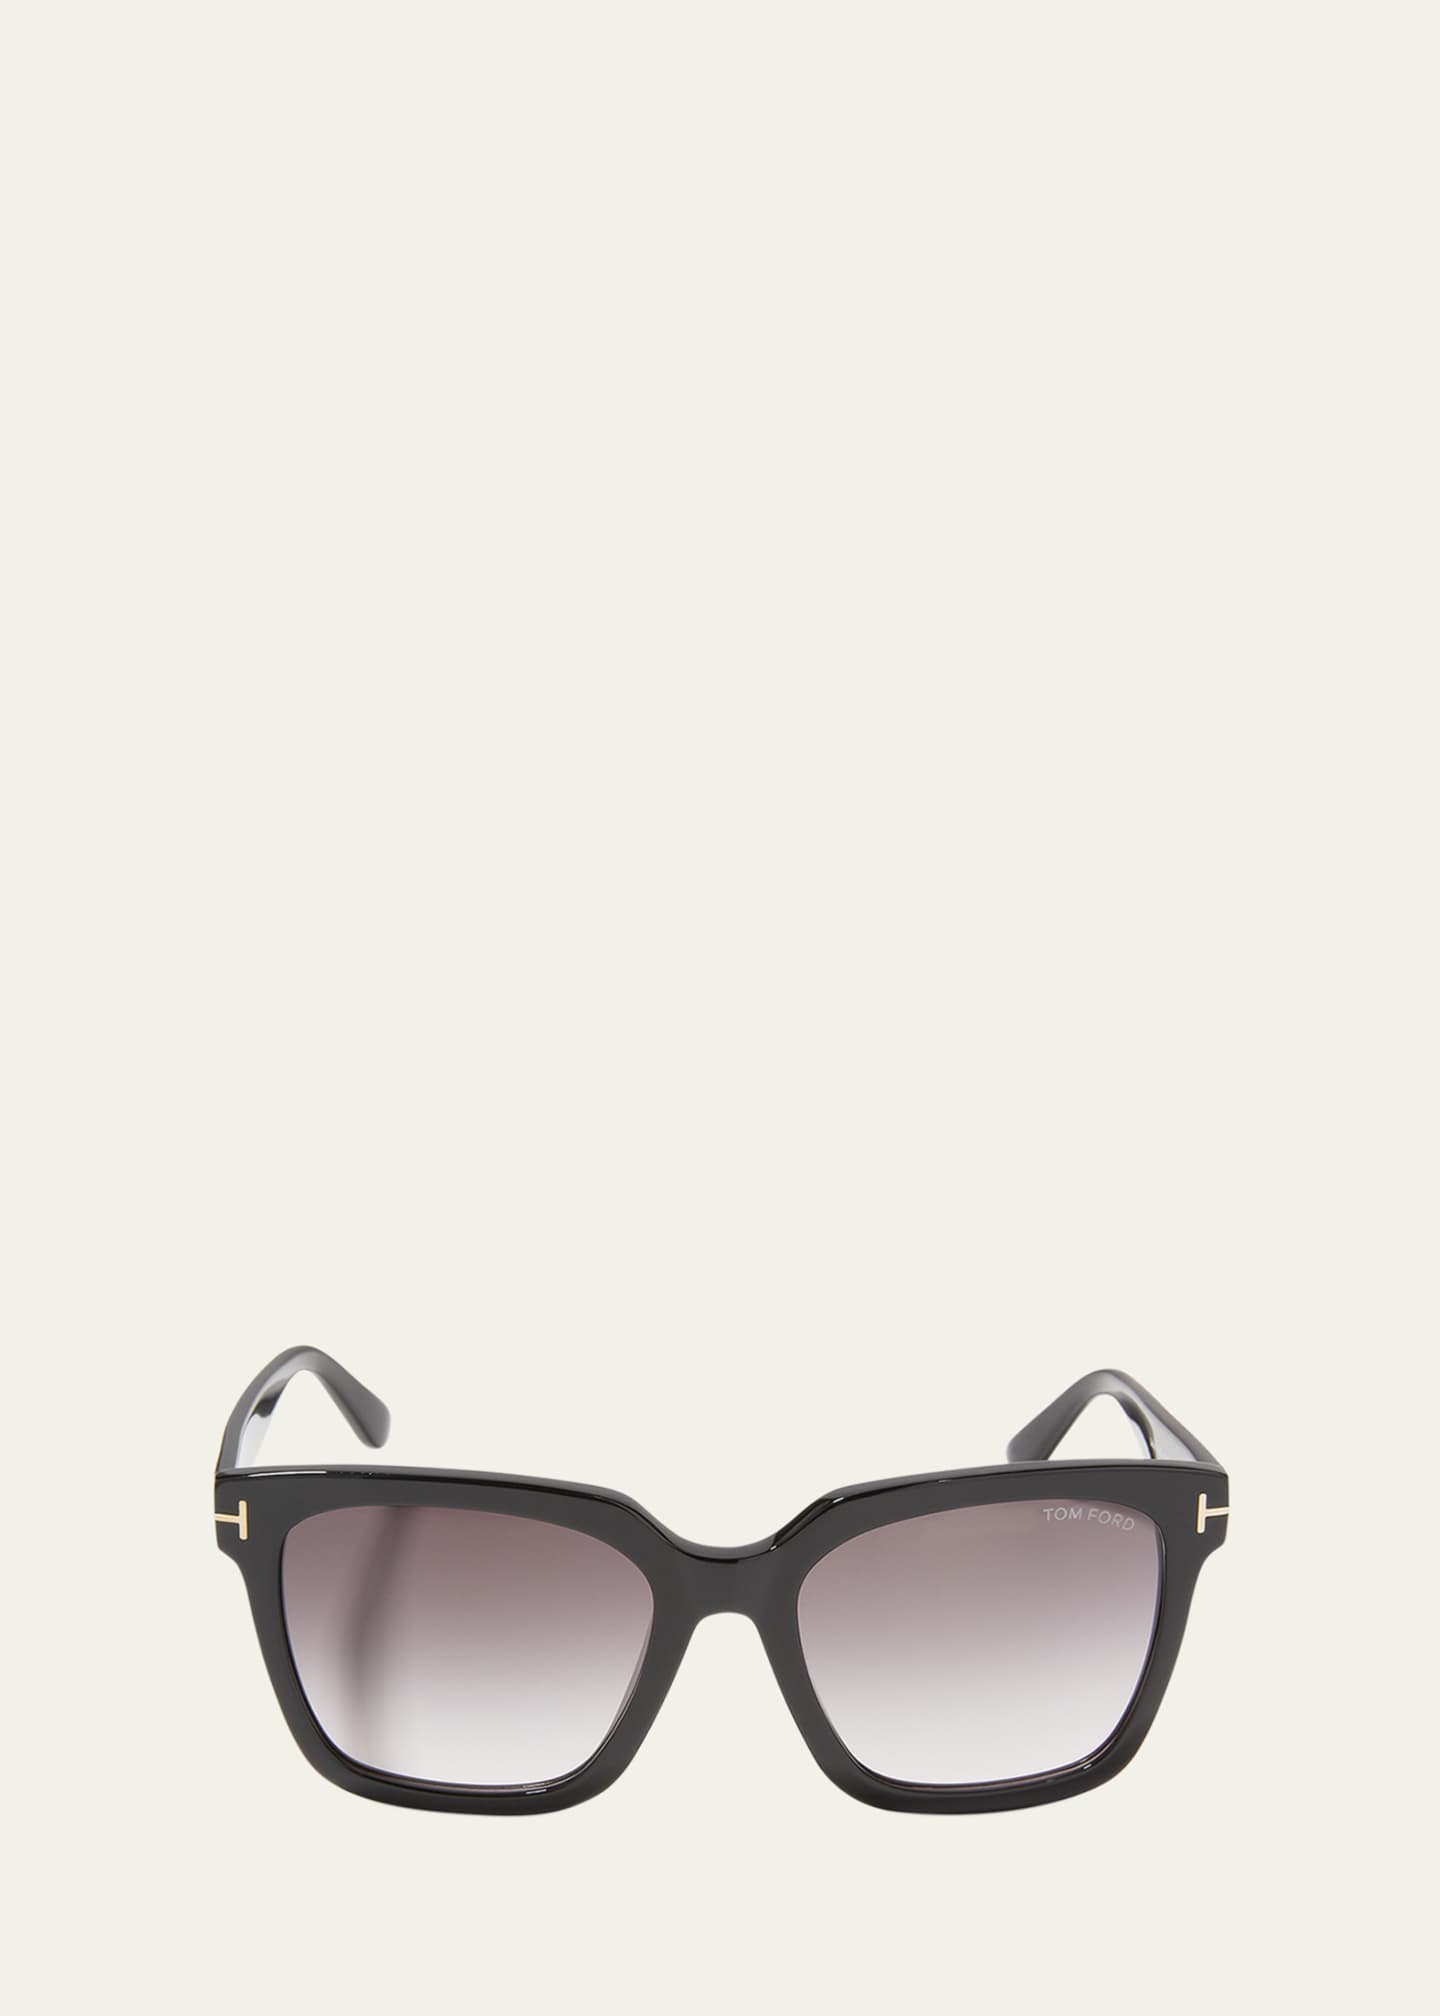 TOM FORD Selby Square Plastic Sunglasses - Bergdorf Goodman